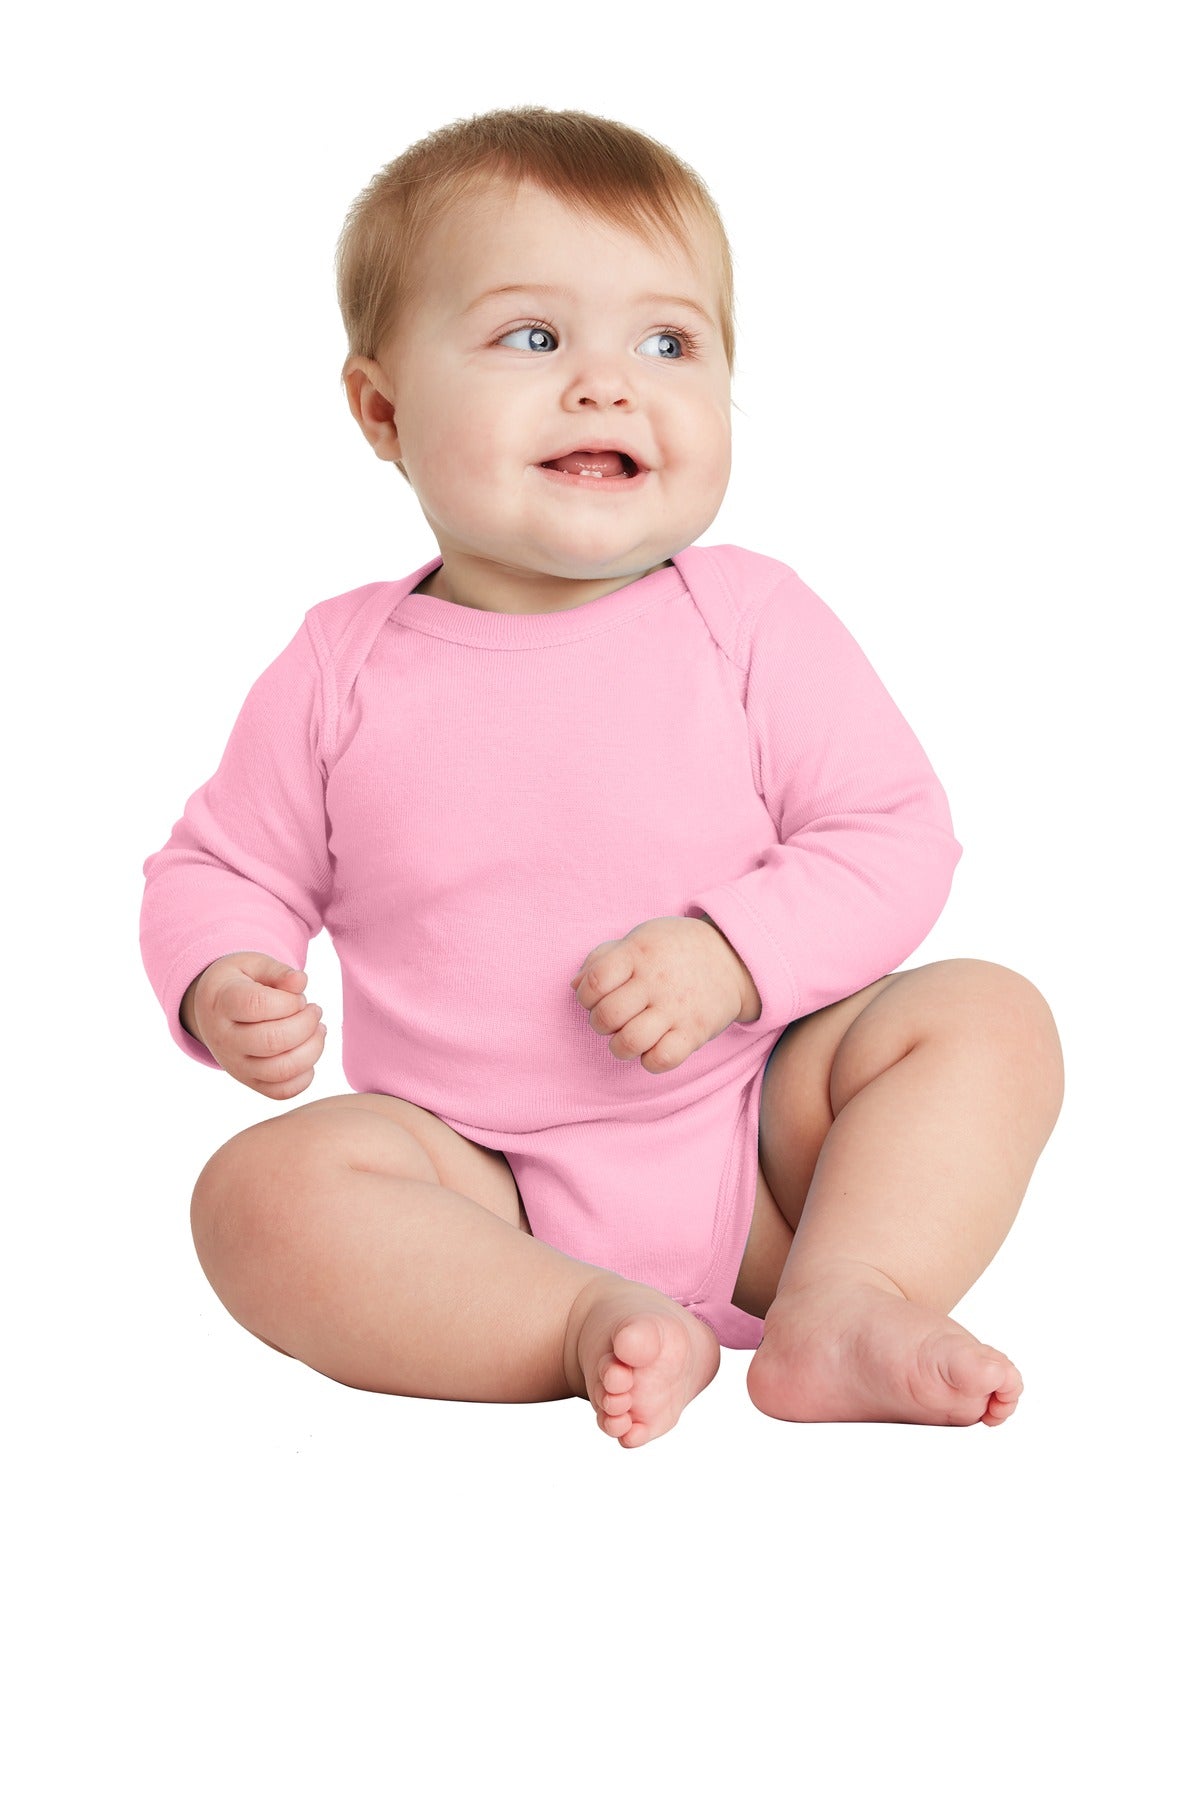 Rabbit Skins™ Infant Long Sleeve Baby Rib Bodysuit. RS4411